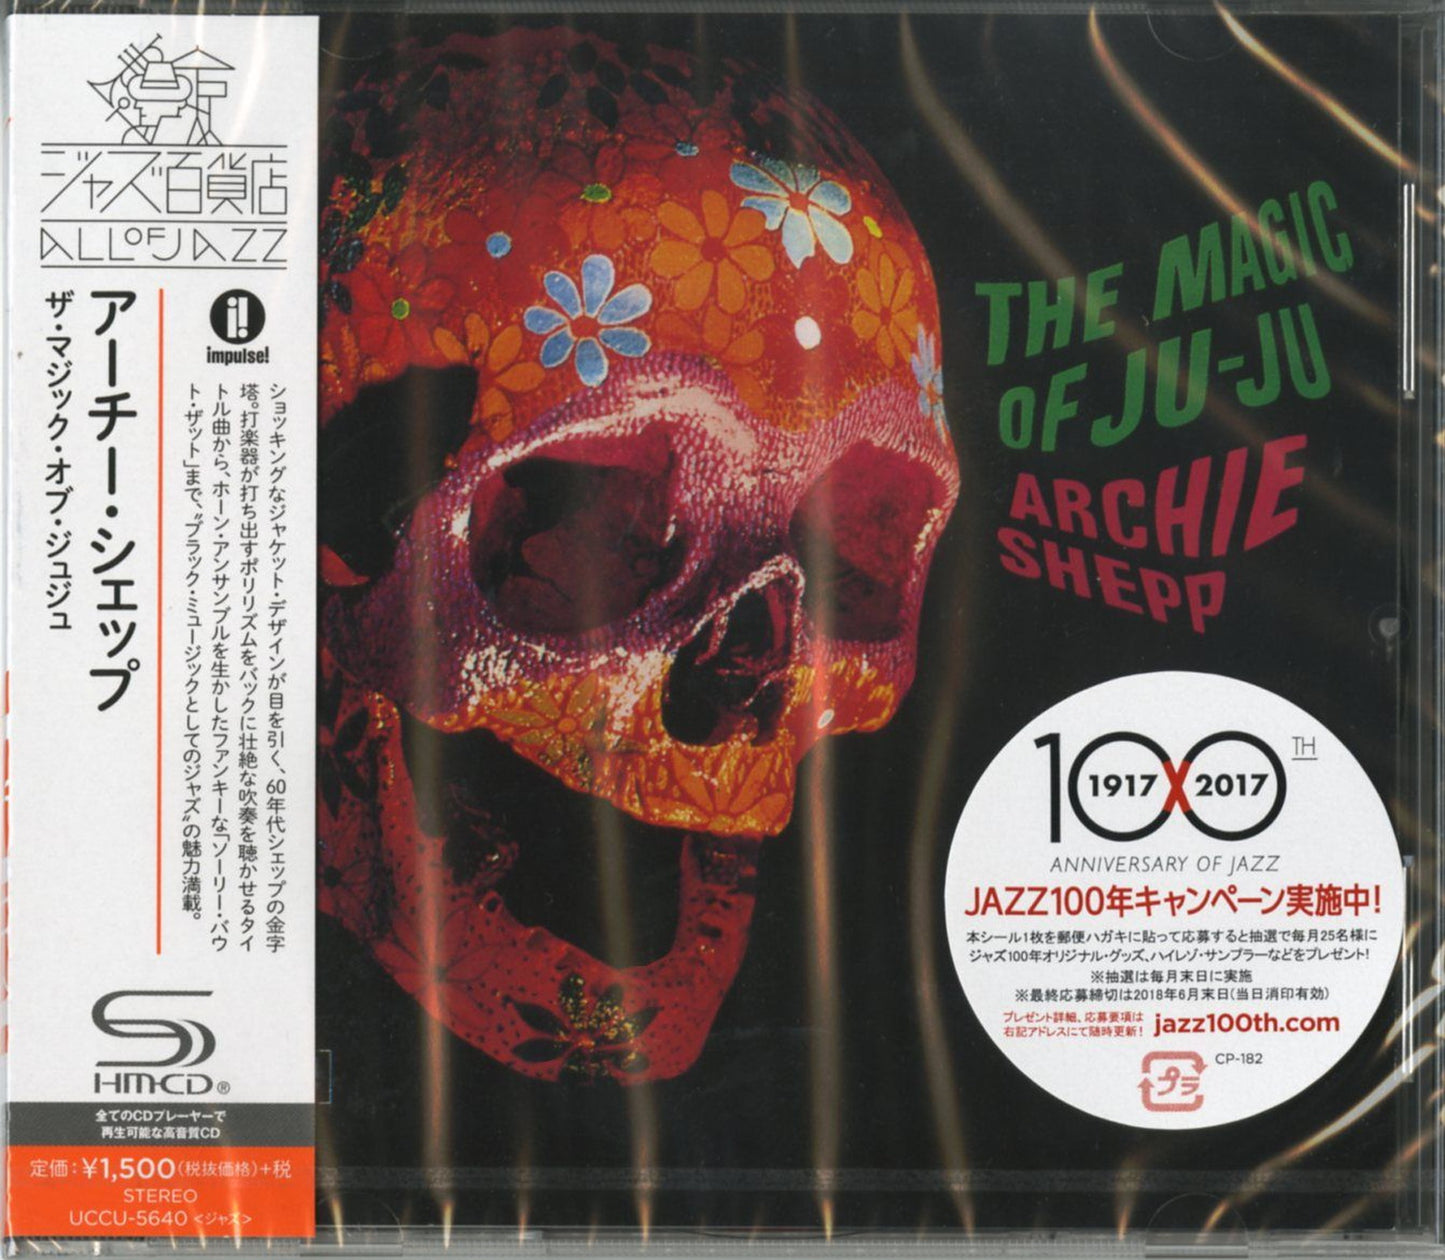 Archie Shepp - The Magic Of Ju-Ju (Release year: 2016) - Japan  SHM-CD